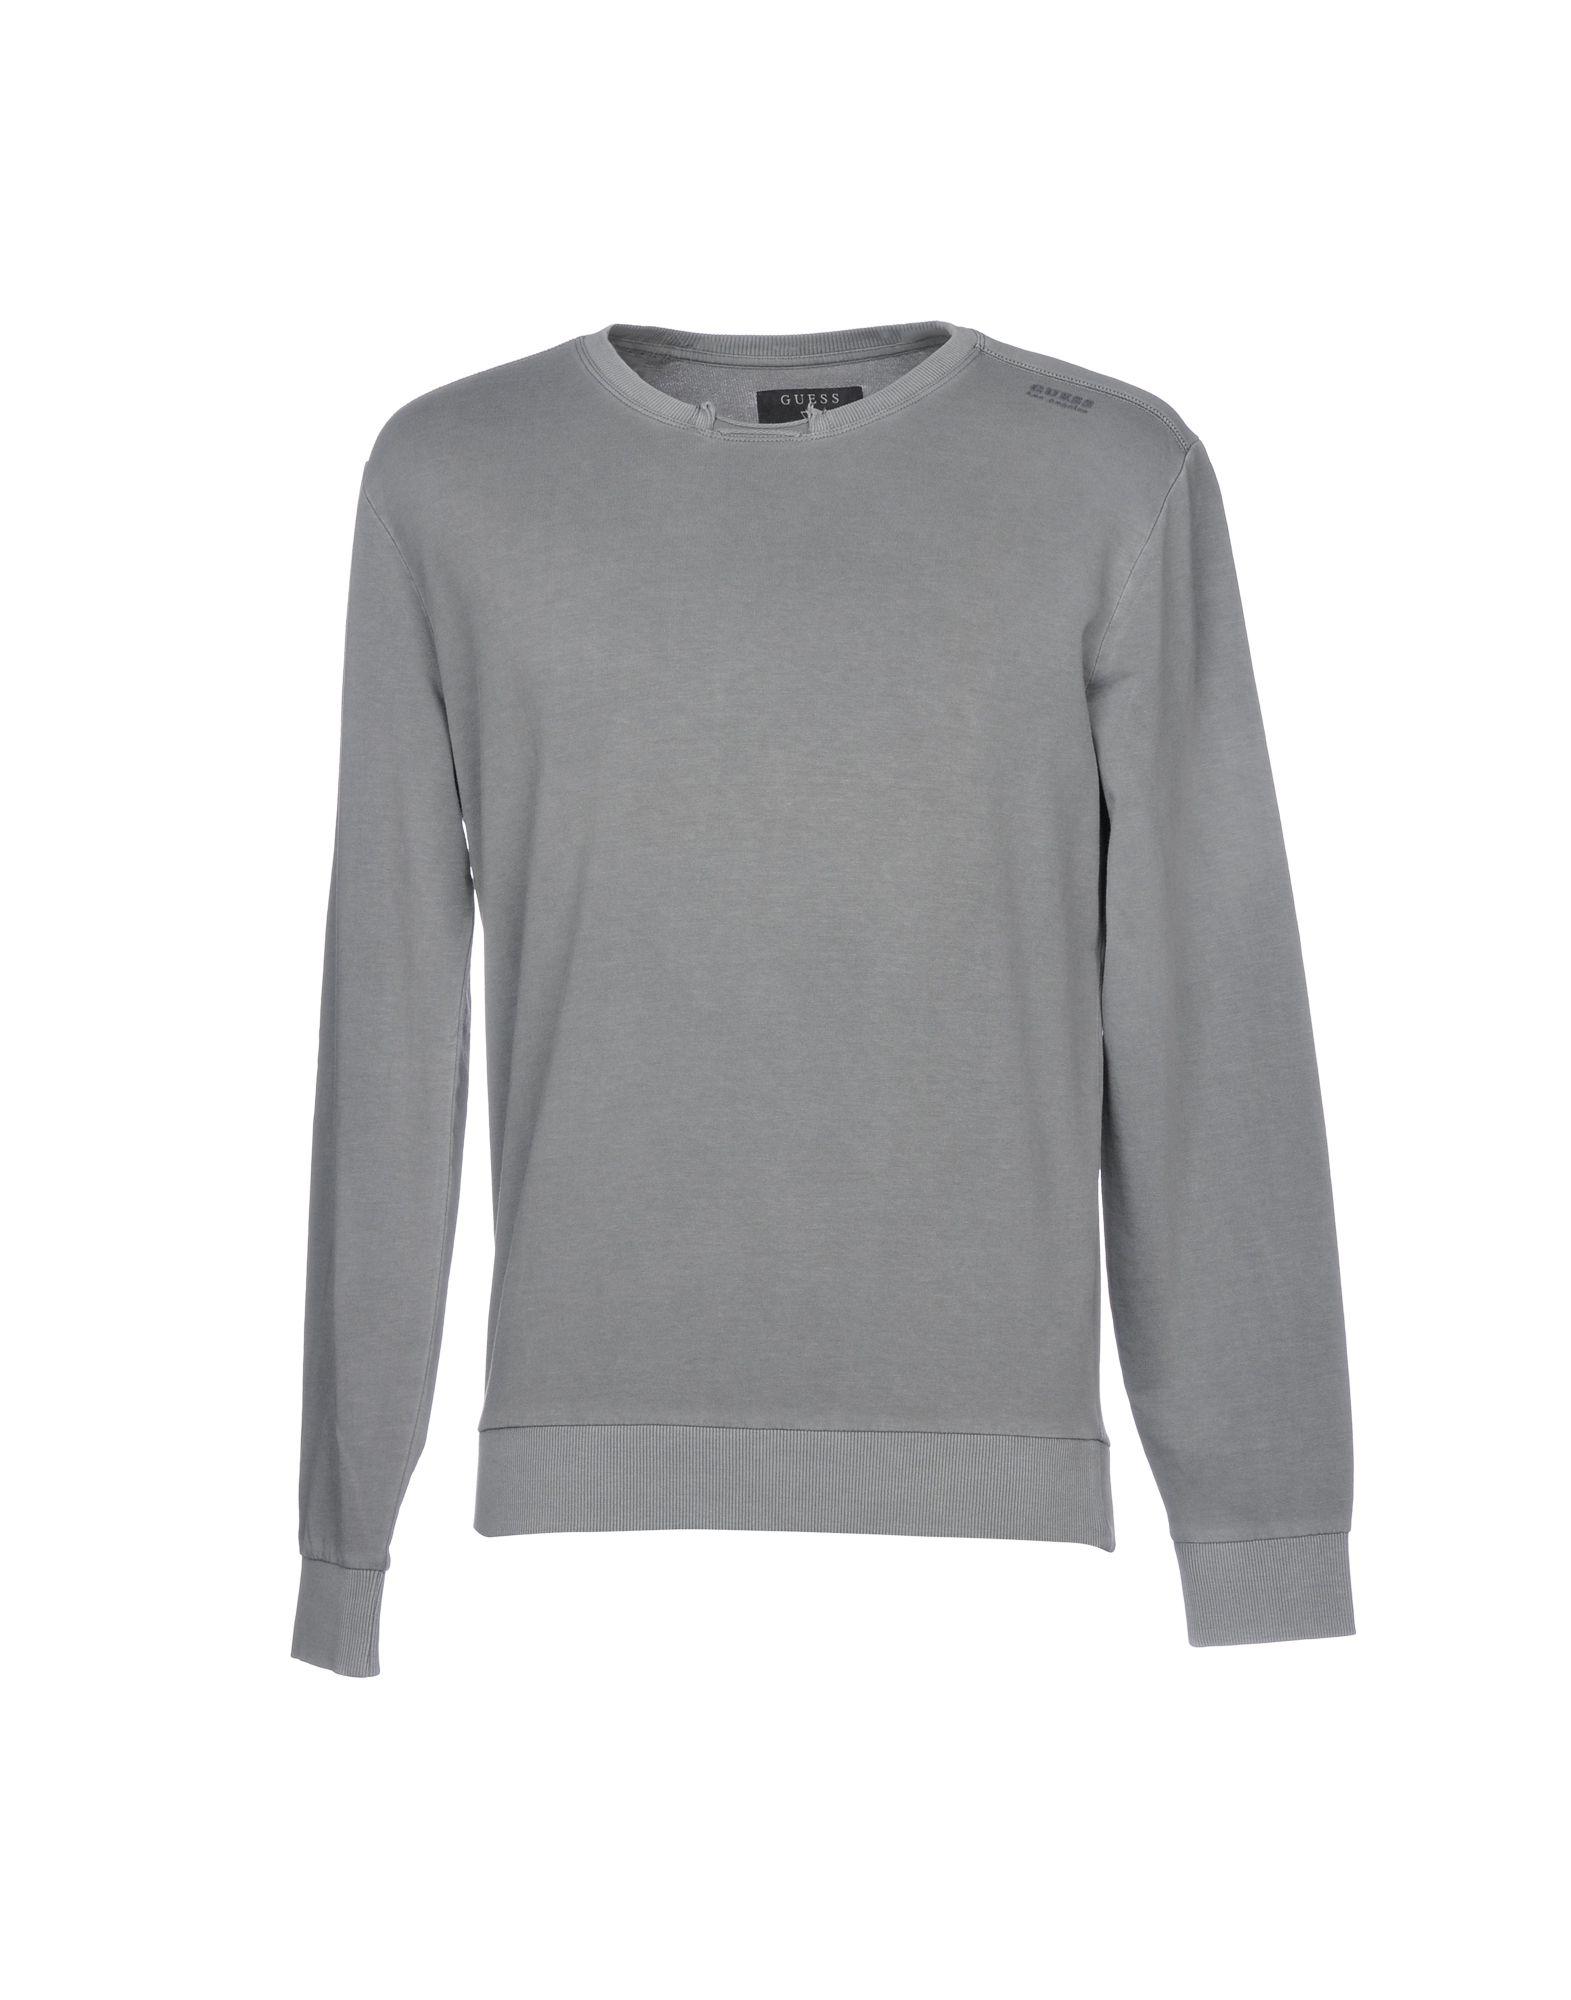 guess grey sweatshirt